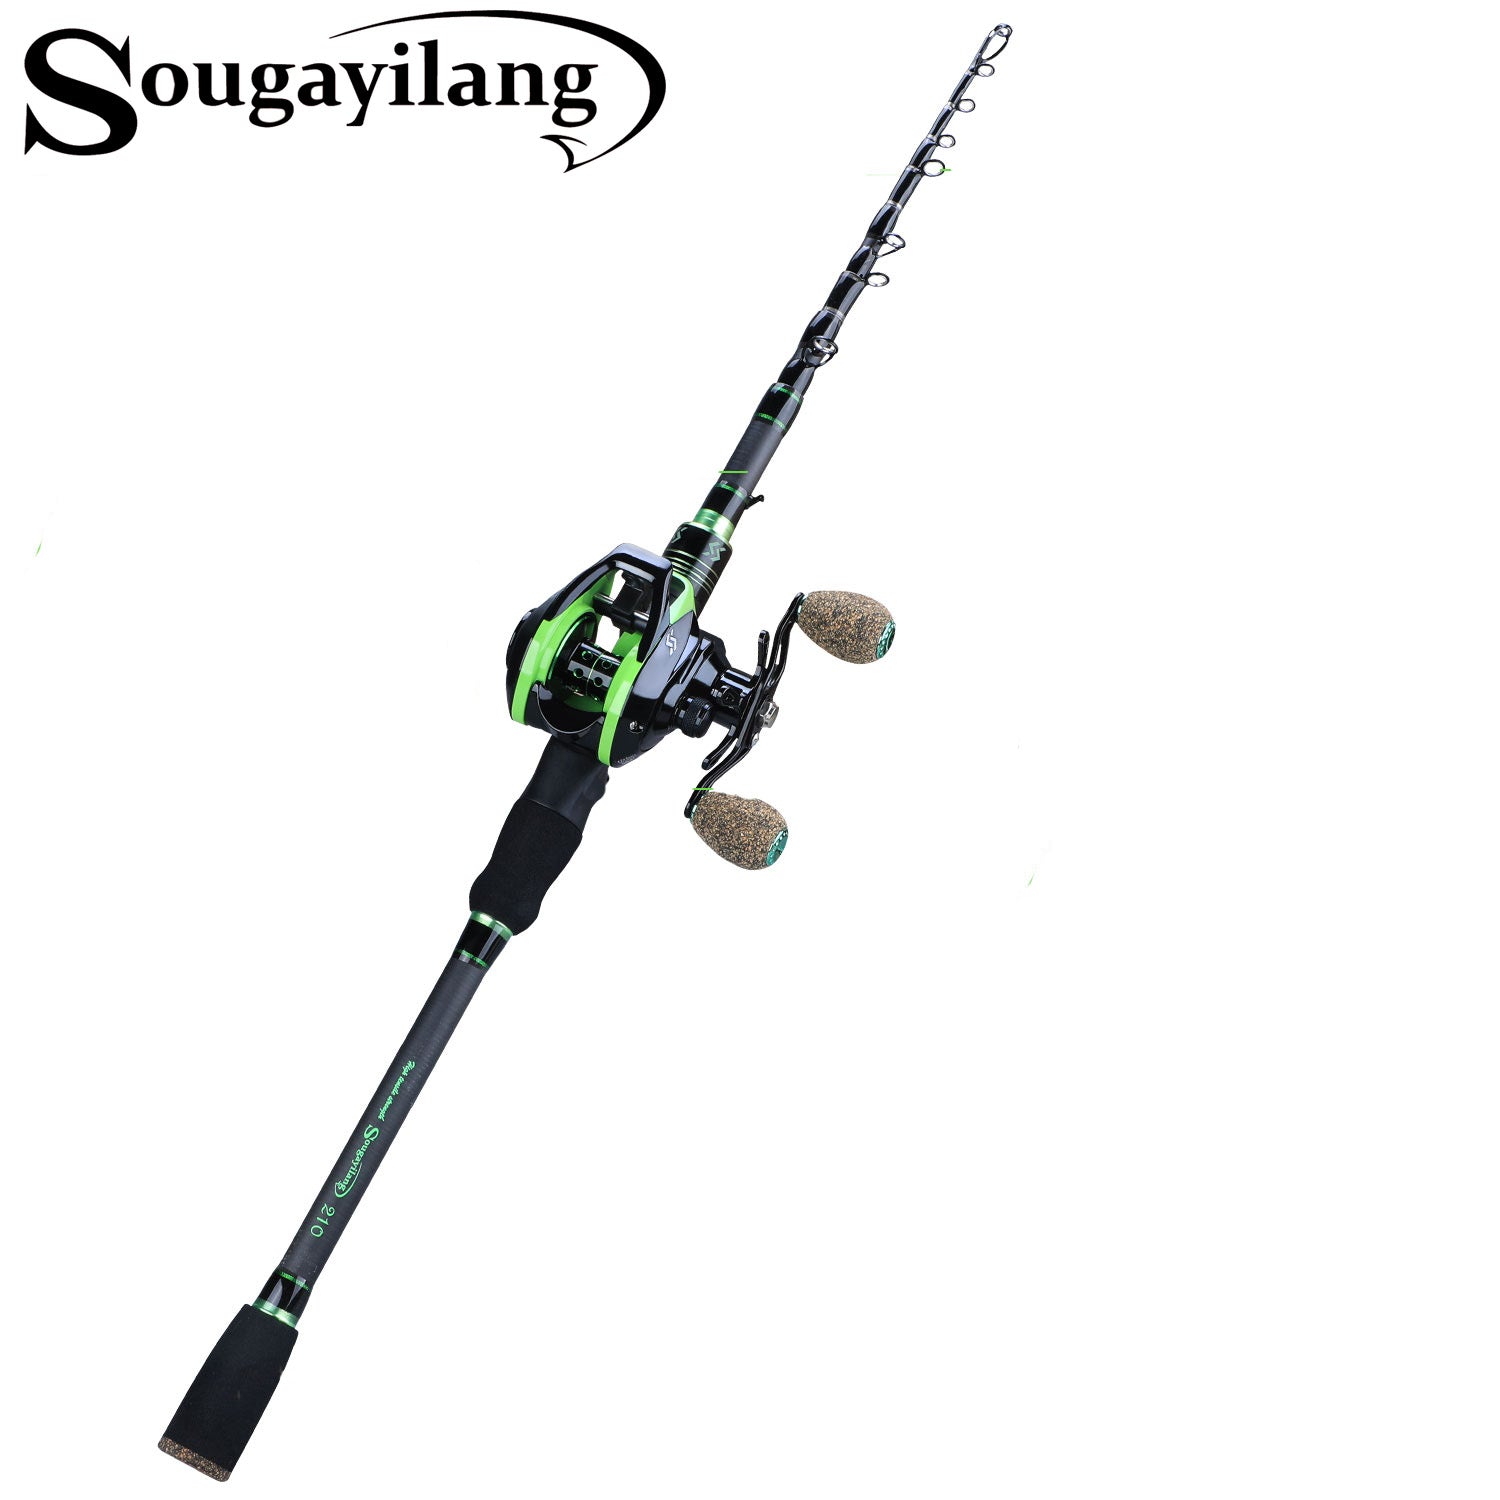 Sougayilang 1.8M 2.1M Telescopic Fishing Rod Combo with 12+1BB 7.2:1